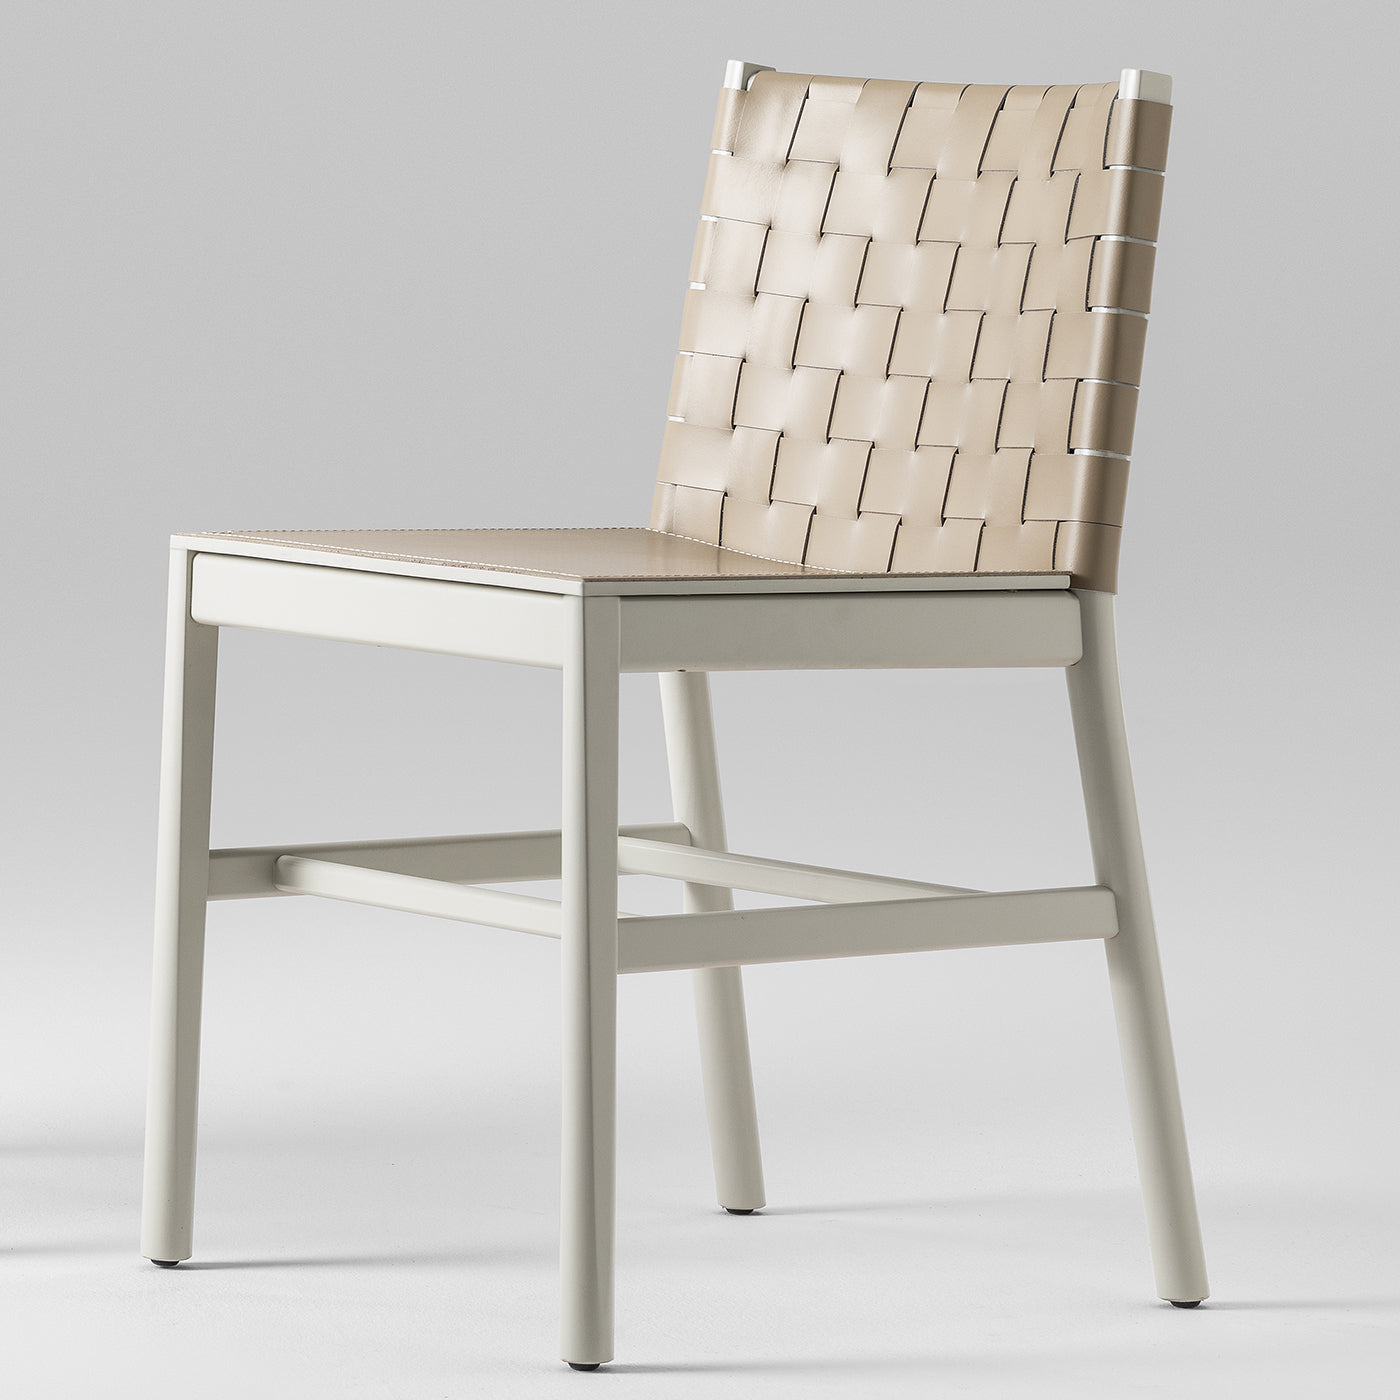 Julie Leather Chair #1 by Emilio Nanni - Alternative view 1